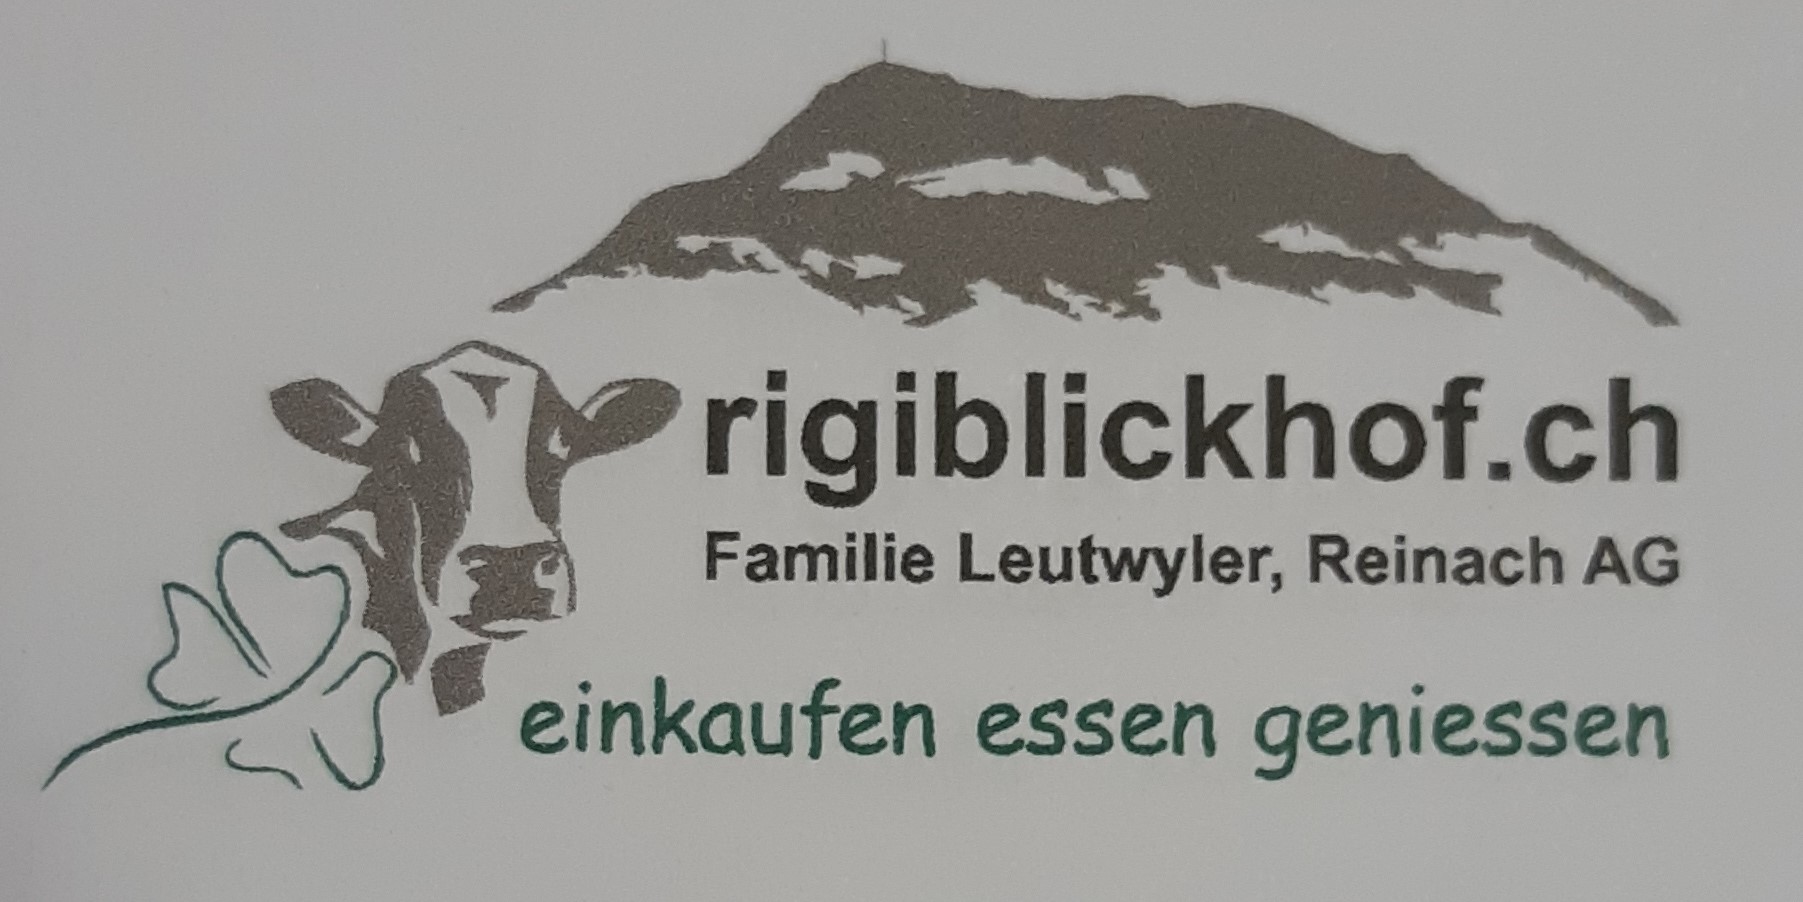 Rigiblickhof